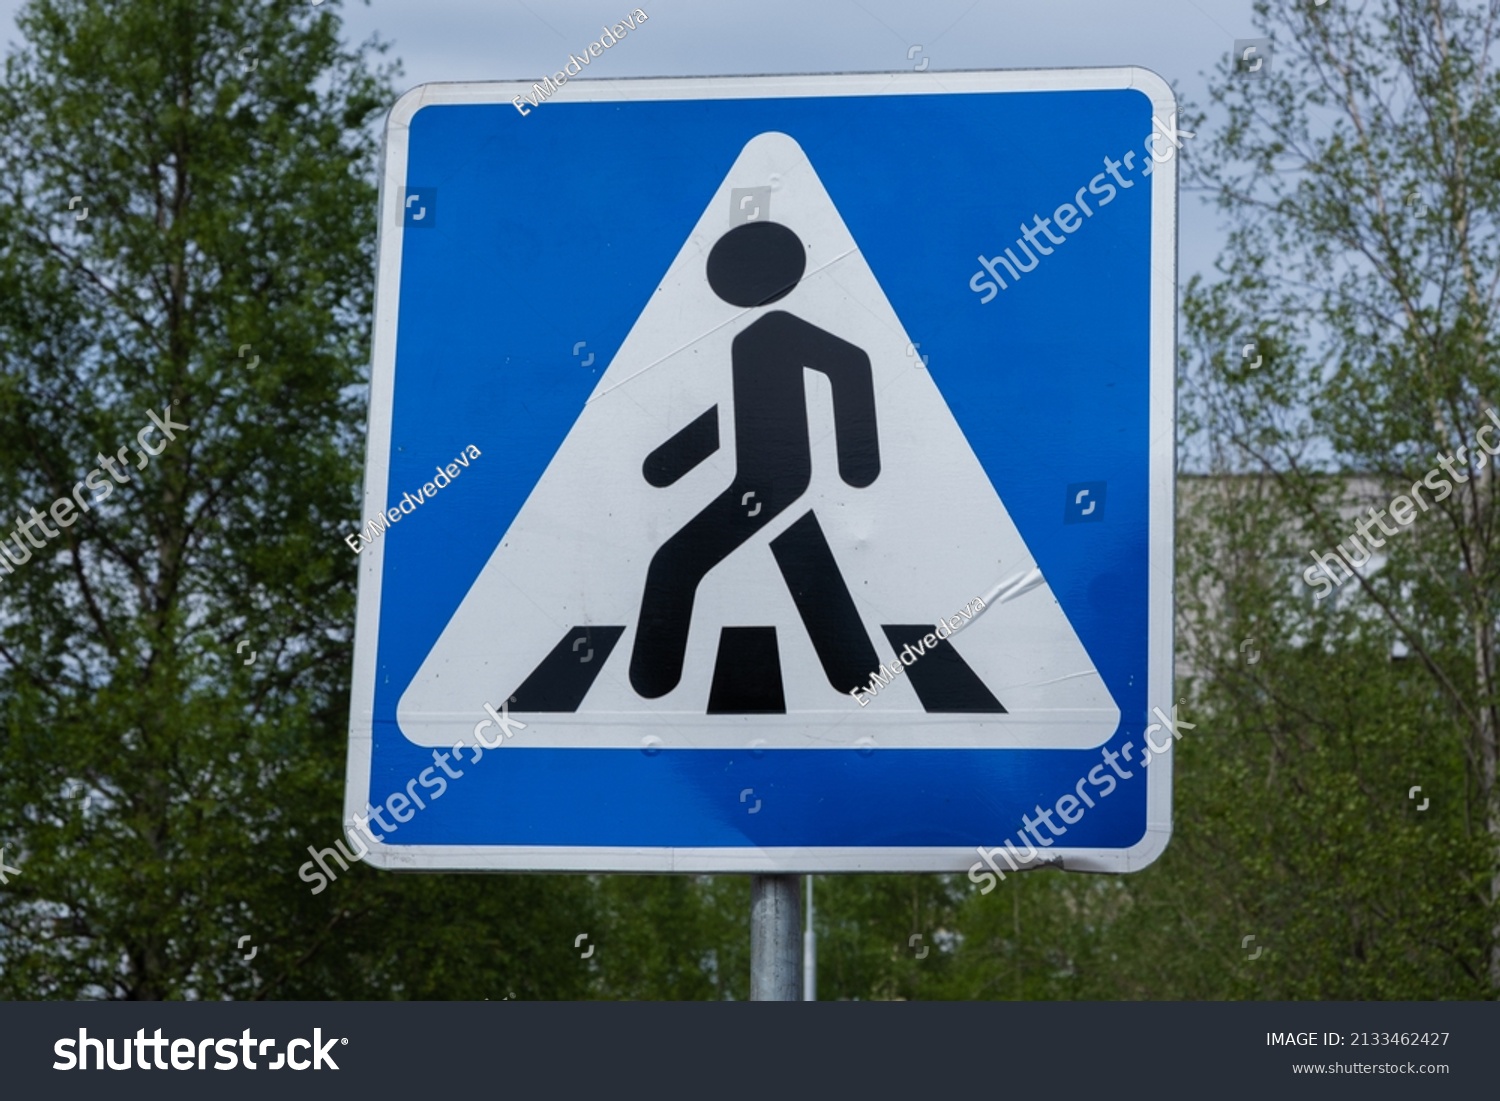 Road sign pedestrian crossing. Zebra crossing, pedestrian cross warning traffic sign in blue and pole #2133462427